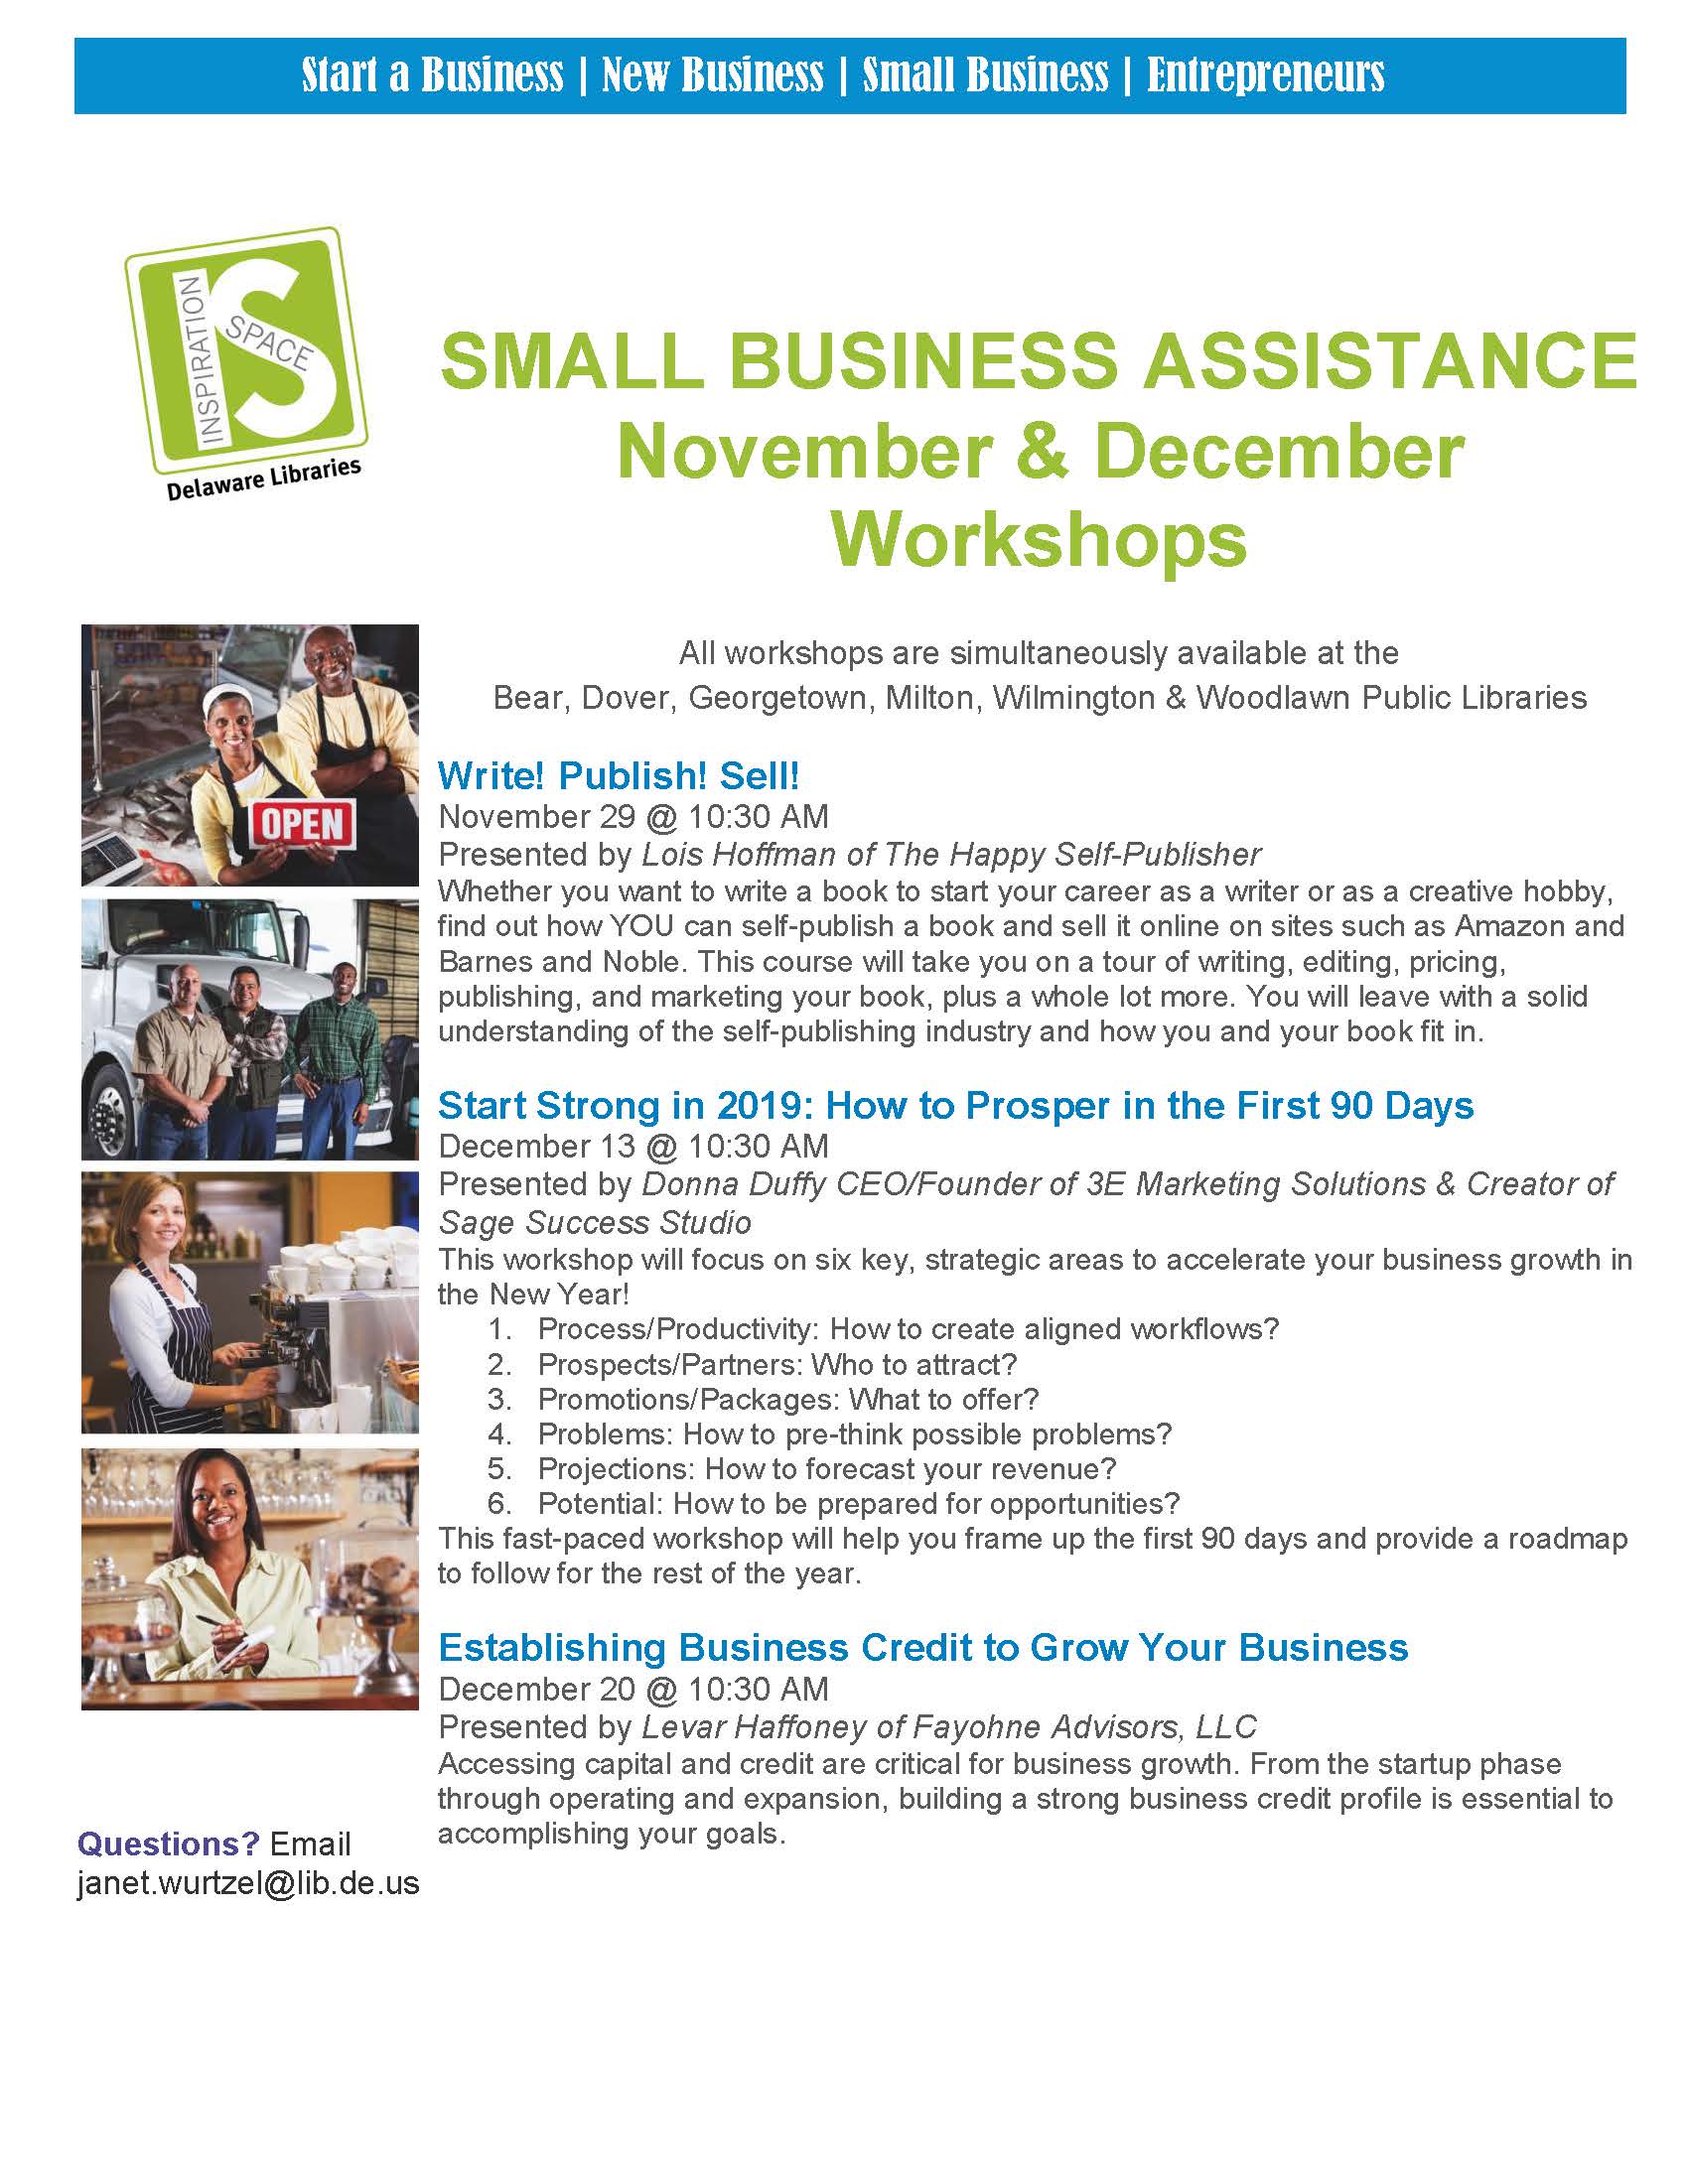 Small Business Assistance December Workshops